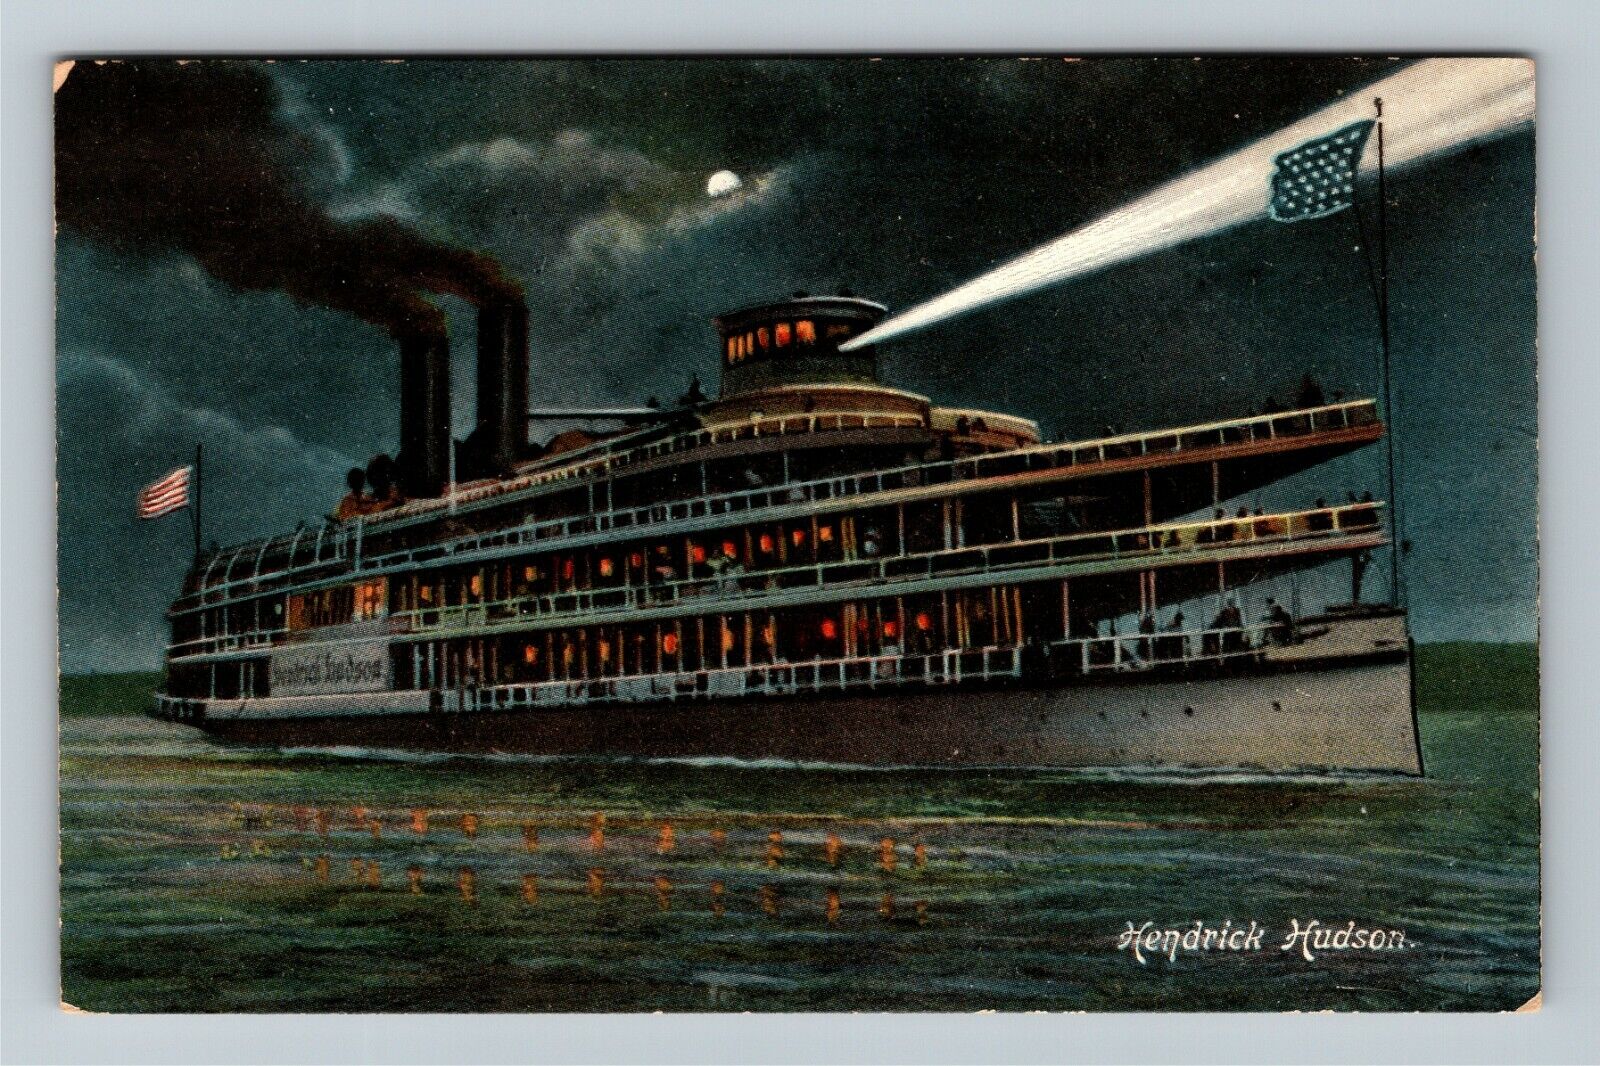 Kendrick Hudson Ship At Night, Vintage Postcard